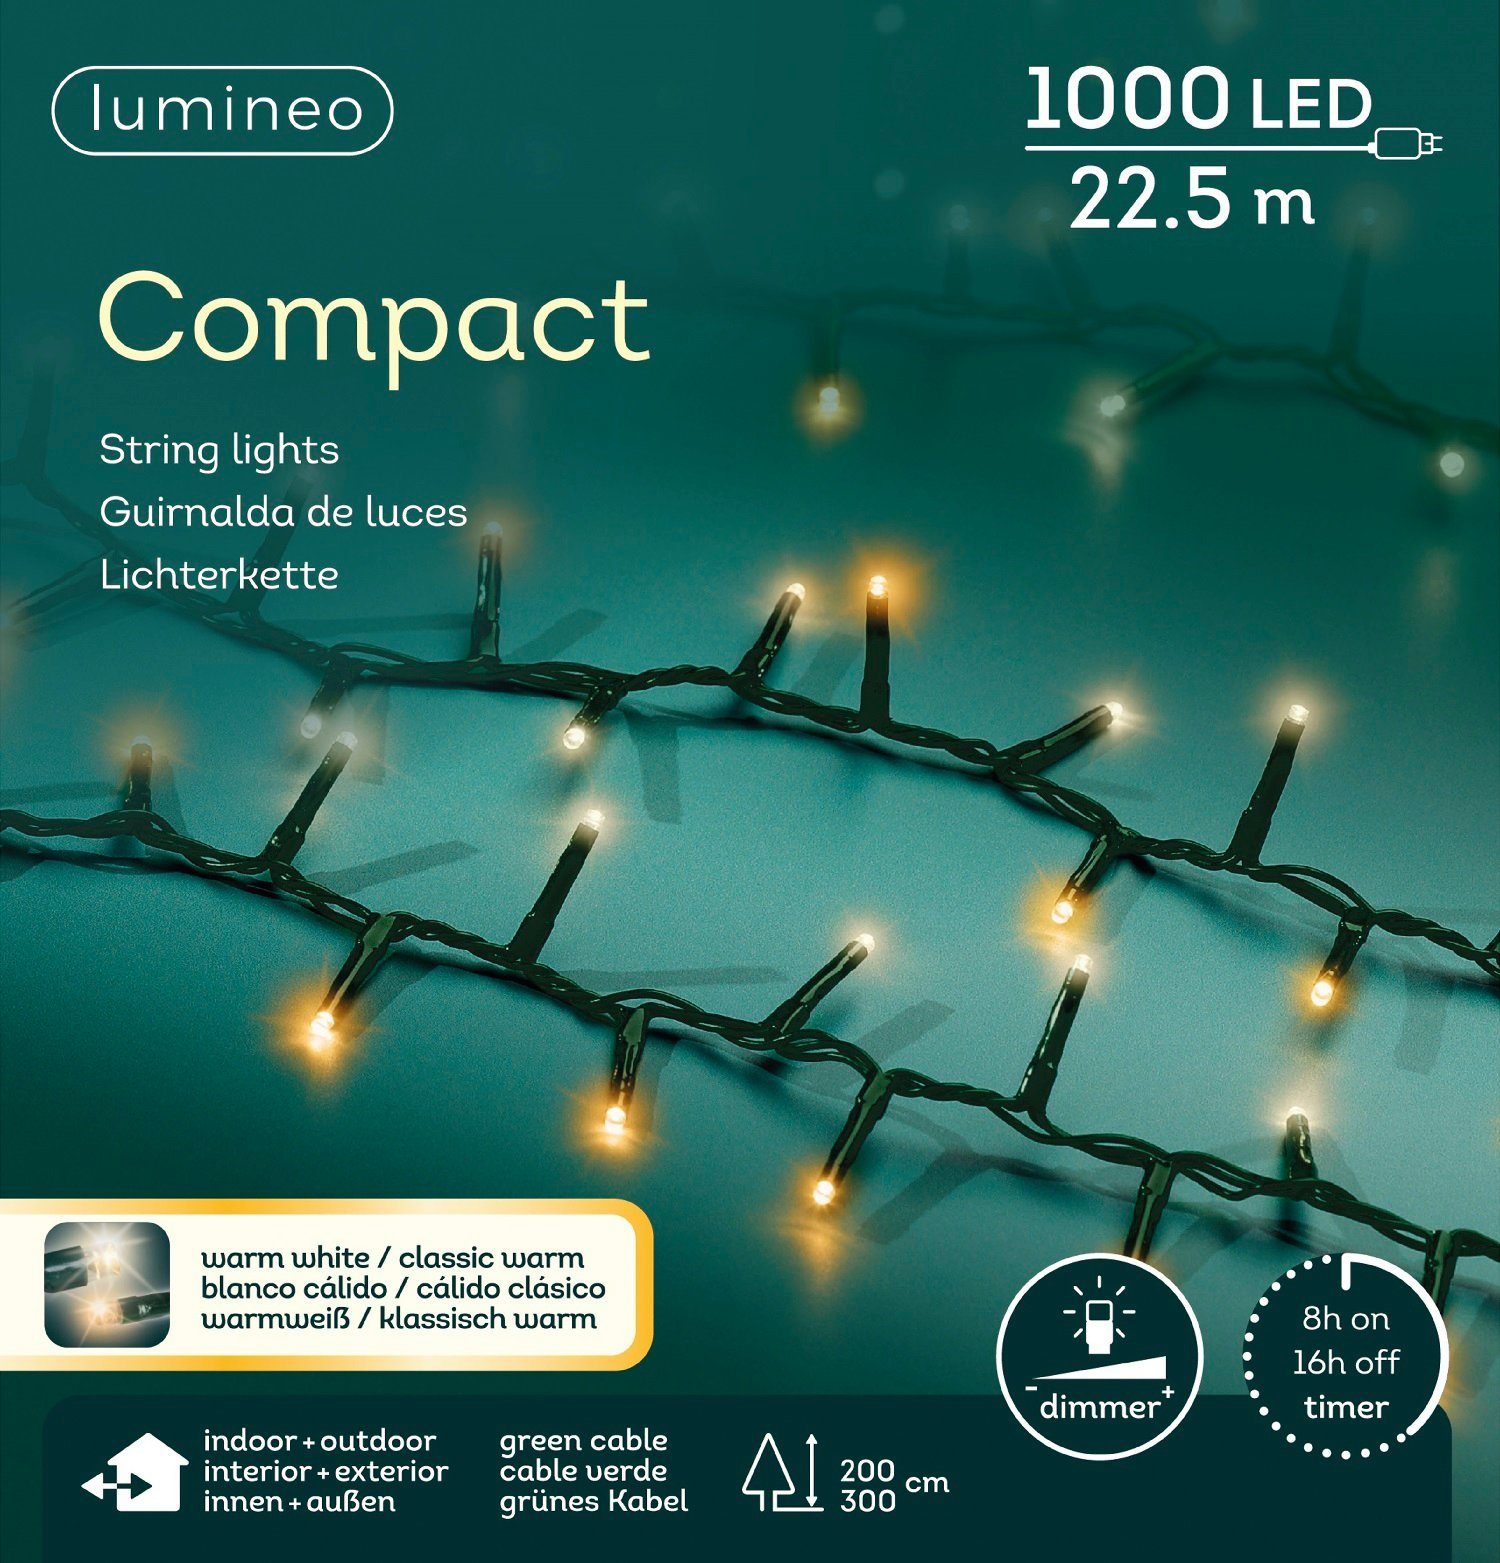 Indoor, Outdoor Dimmbar, 1000 Lumineo weiß/klassisch Lumineo m Timer, Lichterkette LED22,5 LED-Lichterkette Compact warm, warm